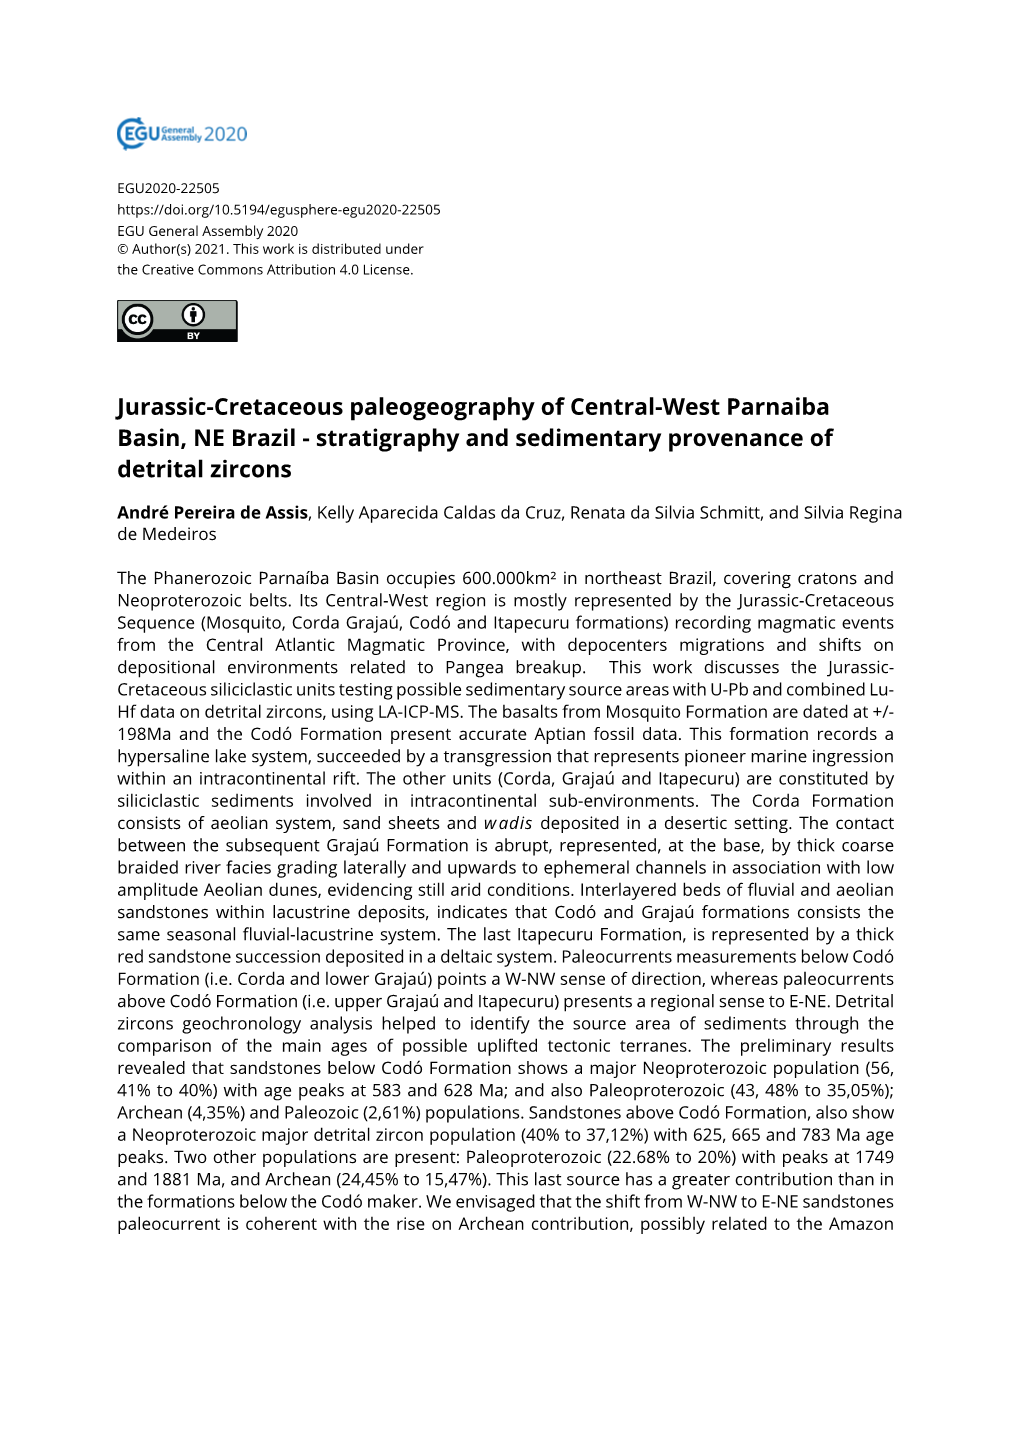 Jurassic-Cretaceous Paleogeography of Central-West Parnaiba Basin, NE Brazil - Stratigraphy and Sedimentary Provenance of Detrital Zircons